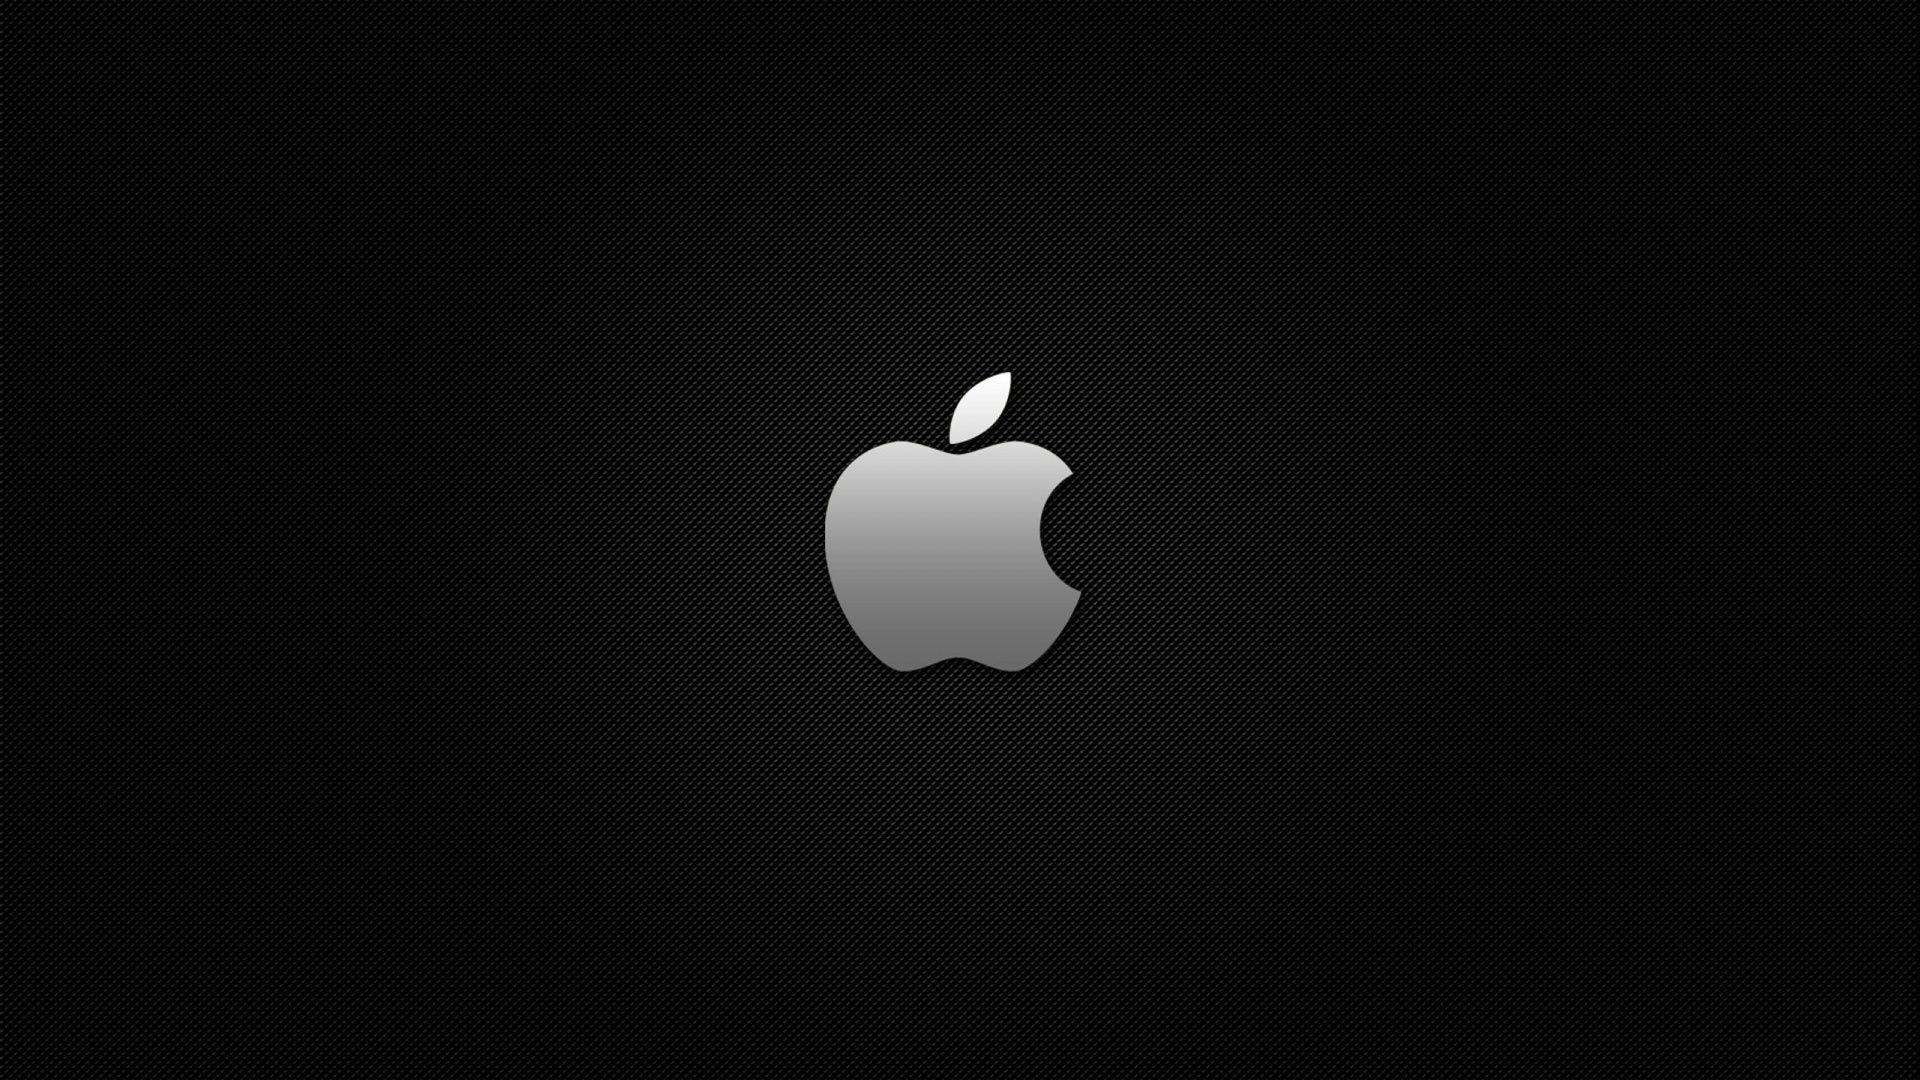 Black Apple Logo Wallpaper HD Wallpaper. Apple logo wallpaper, Black apple logo, Apple logo